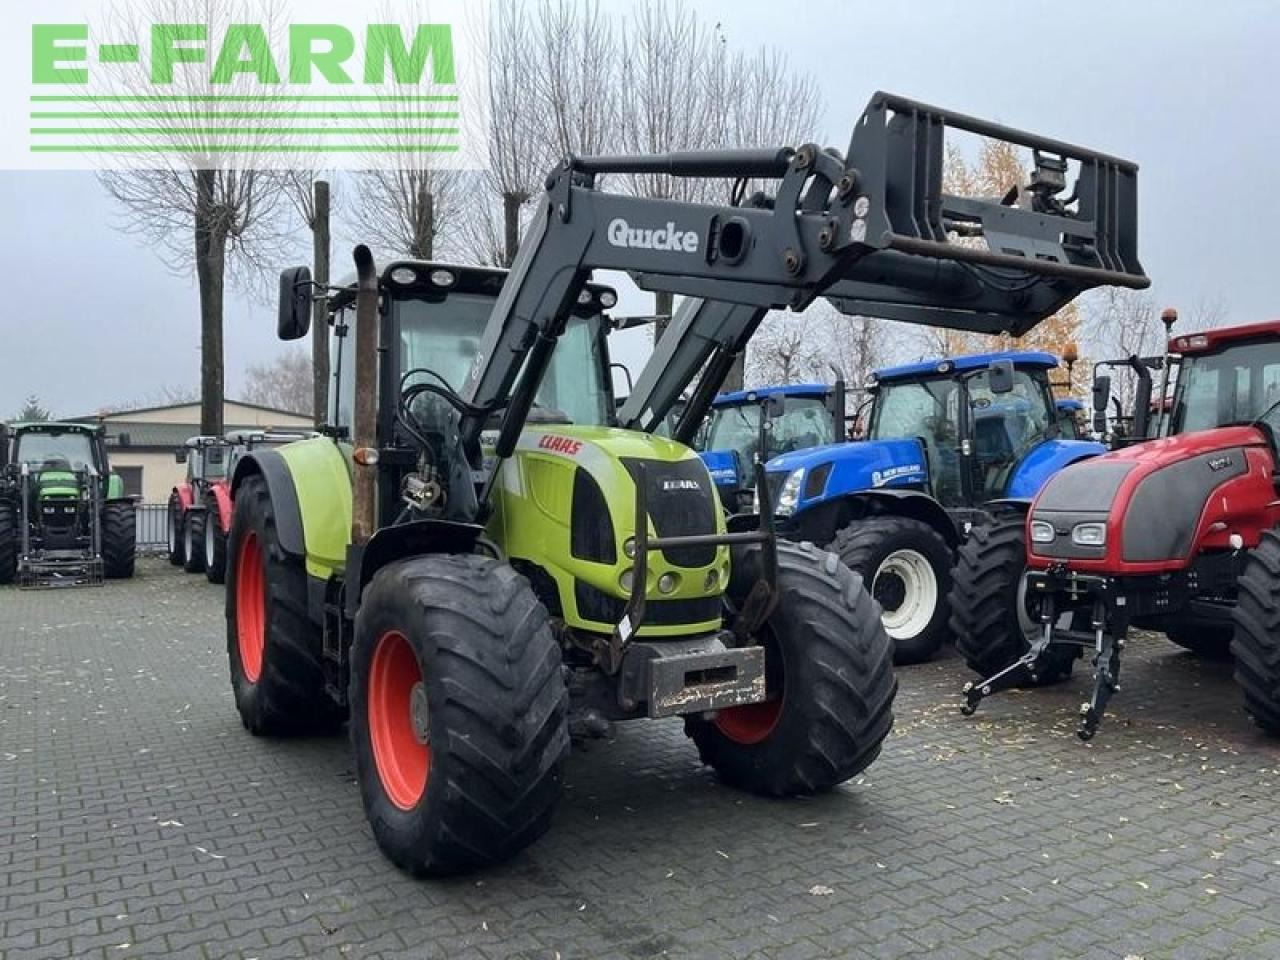 Farm tractor CLAAS arion 640 cis + quicke q65